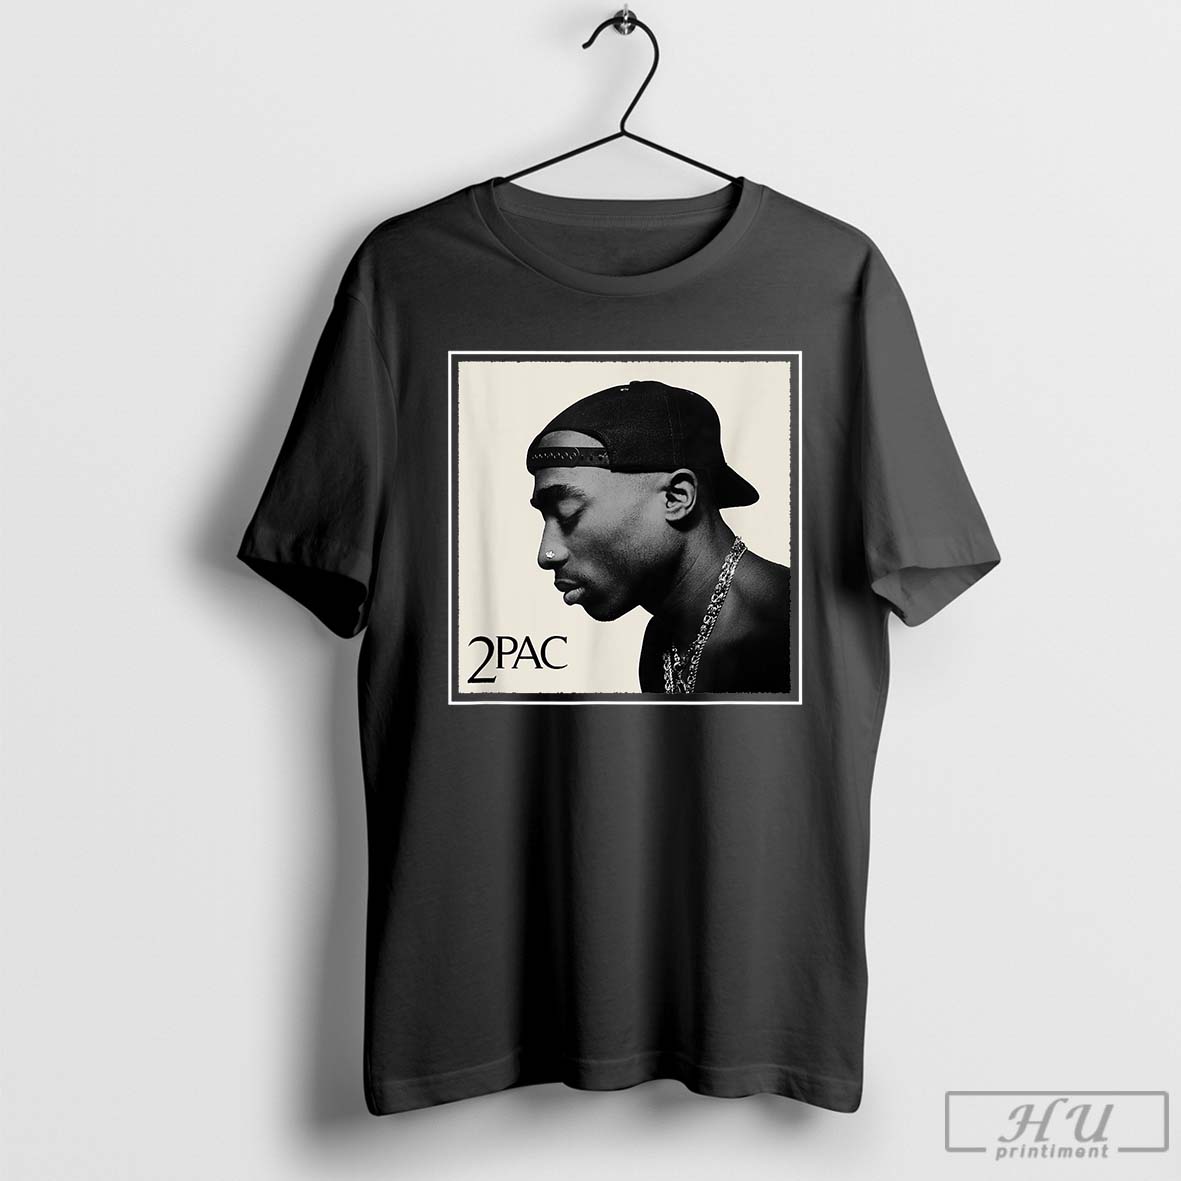 Tupac Shakur Photo Printiment - T-Shirt, Hands Tupac Shakur Shirt Praying